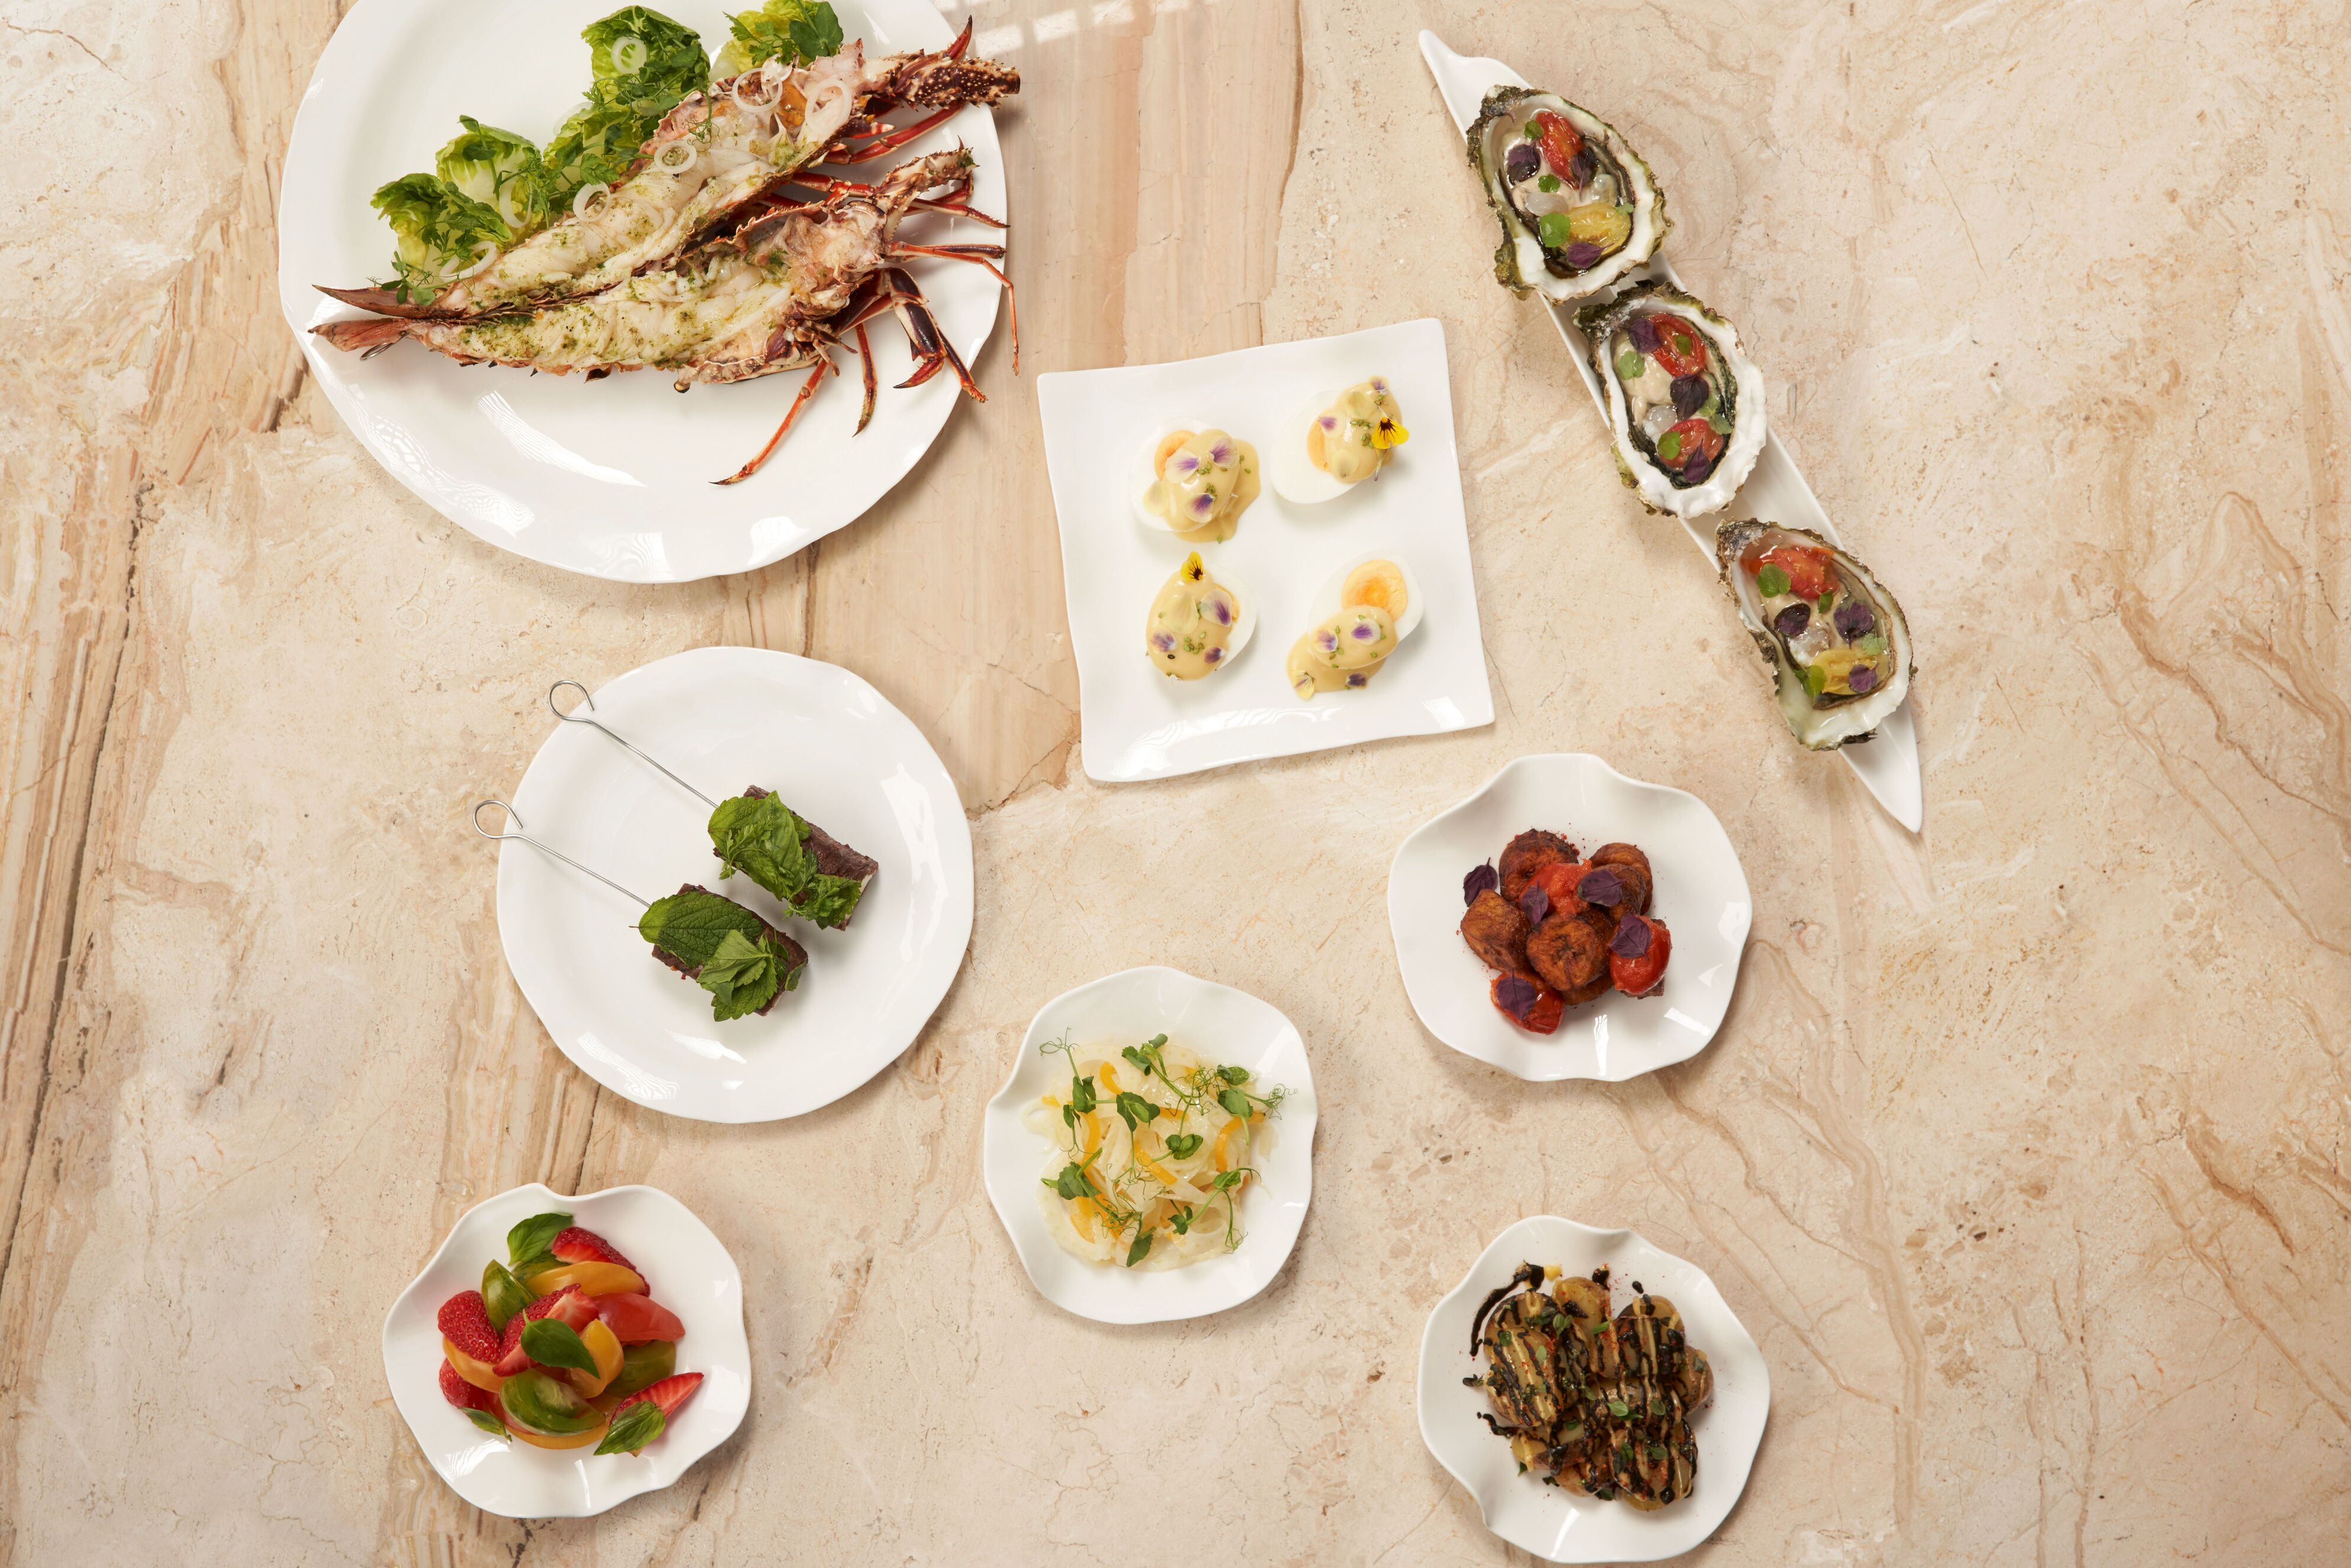 Mory Sacko at Louis Vuitton 的晚餐包含有烤鰤魚、小龍蝦、生 蠔、生茴香芒果沙拉等美味料理。